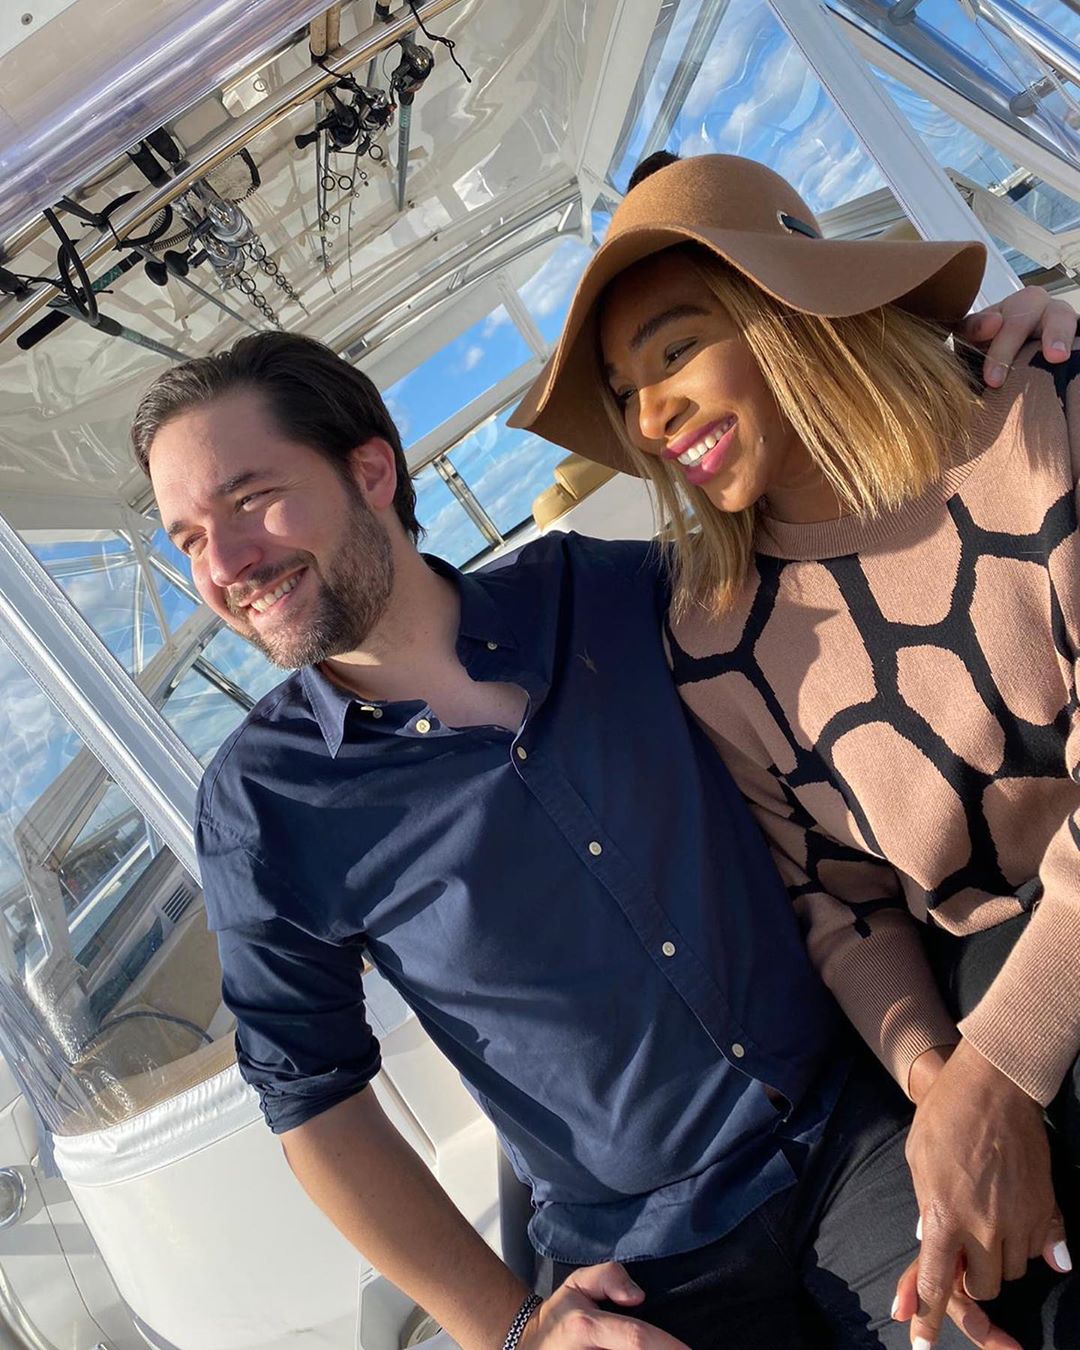 Reddit cofounder and Serena Williams' husband Alexis